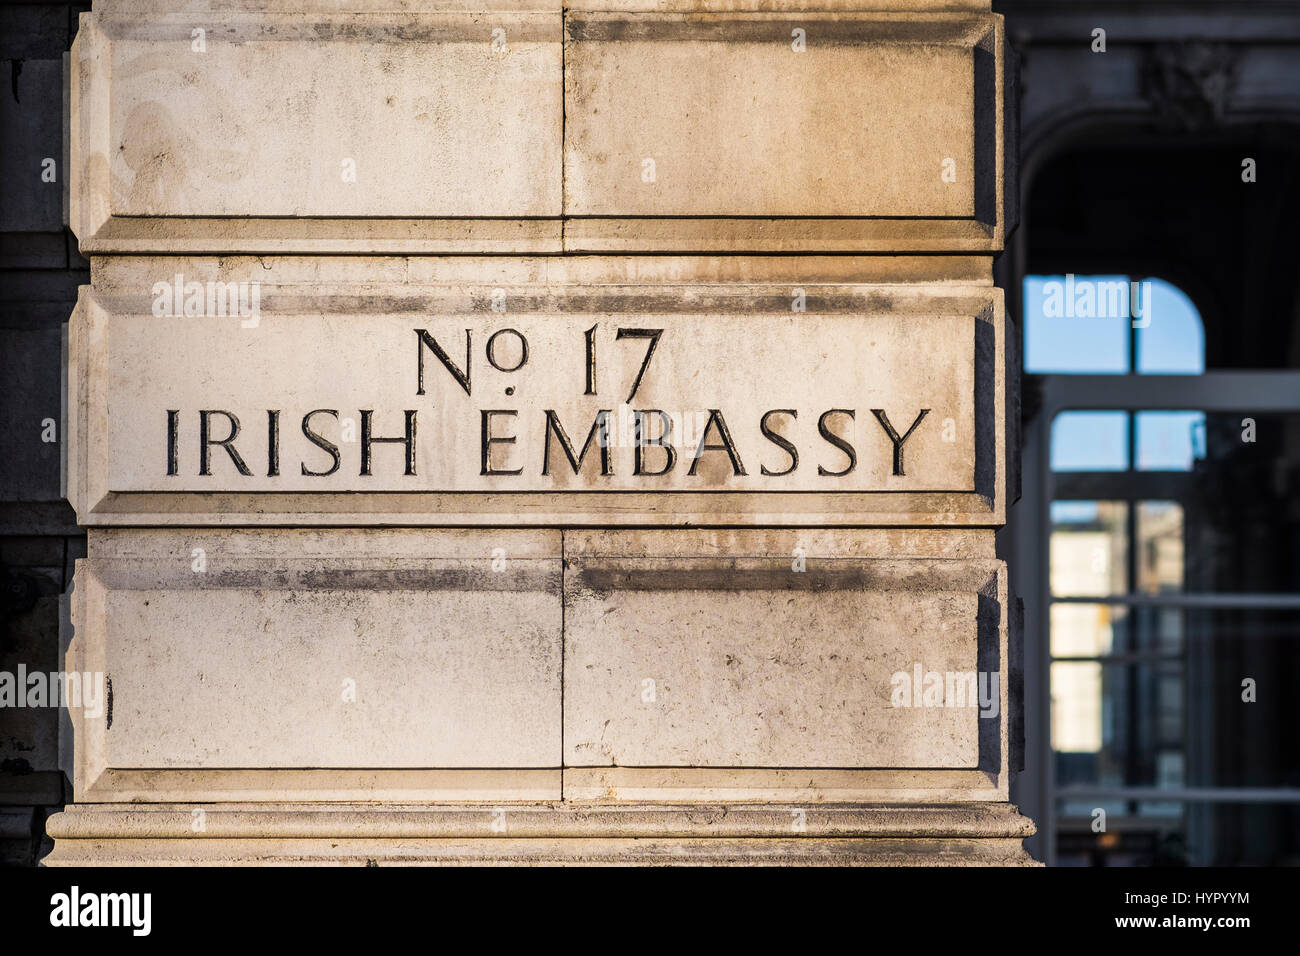 Republic of Ireland embassy, 17 Grosvenor Place, London, England, U.K. Stock Photo